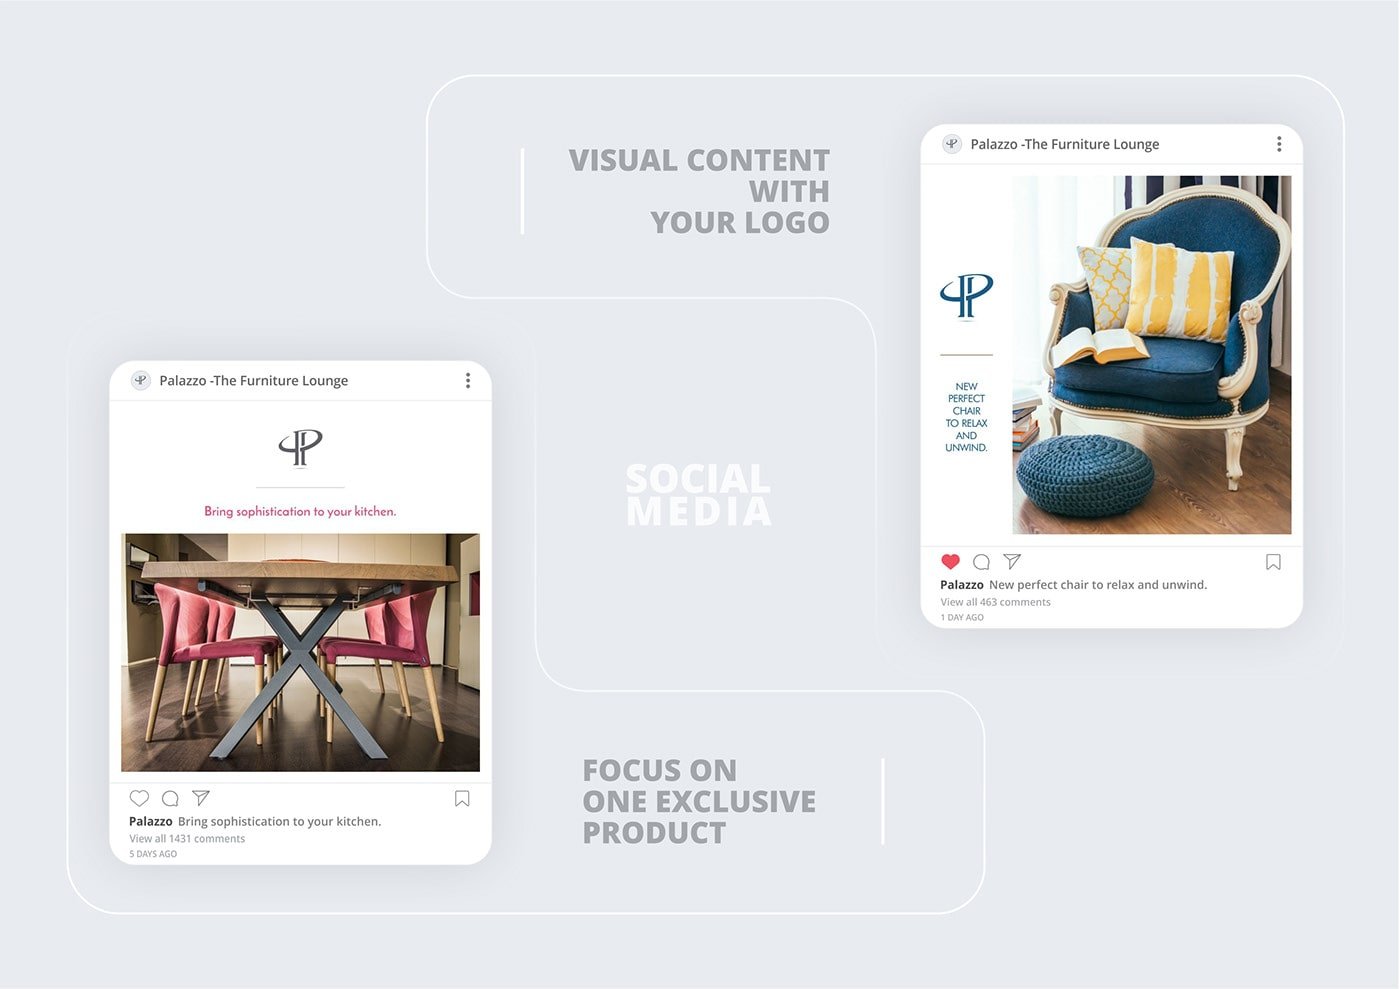 Social Media Marketing for Furniture Brand